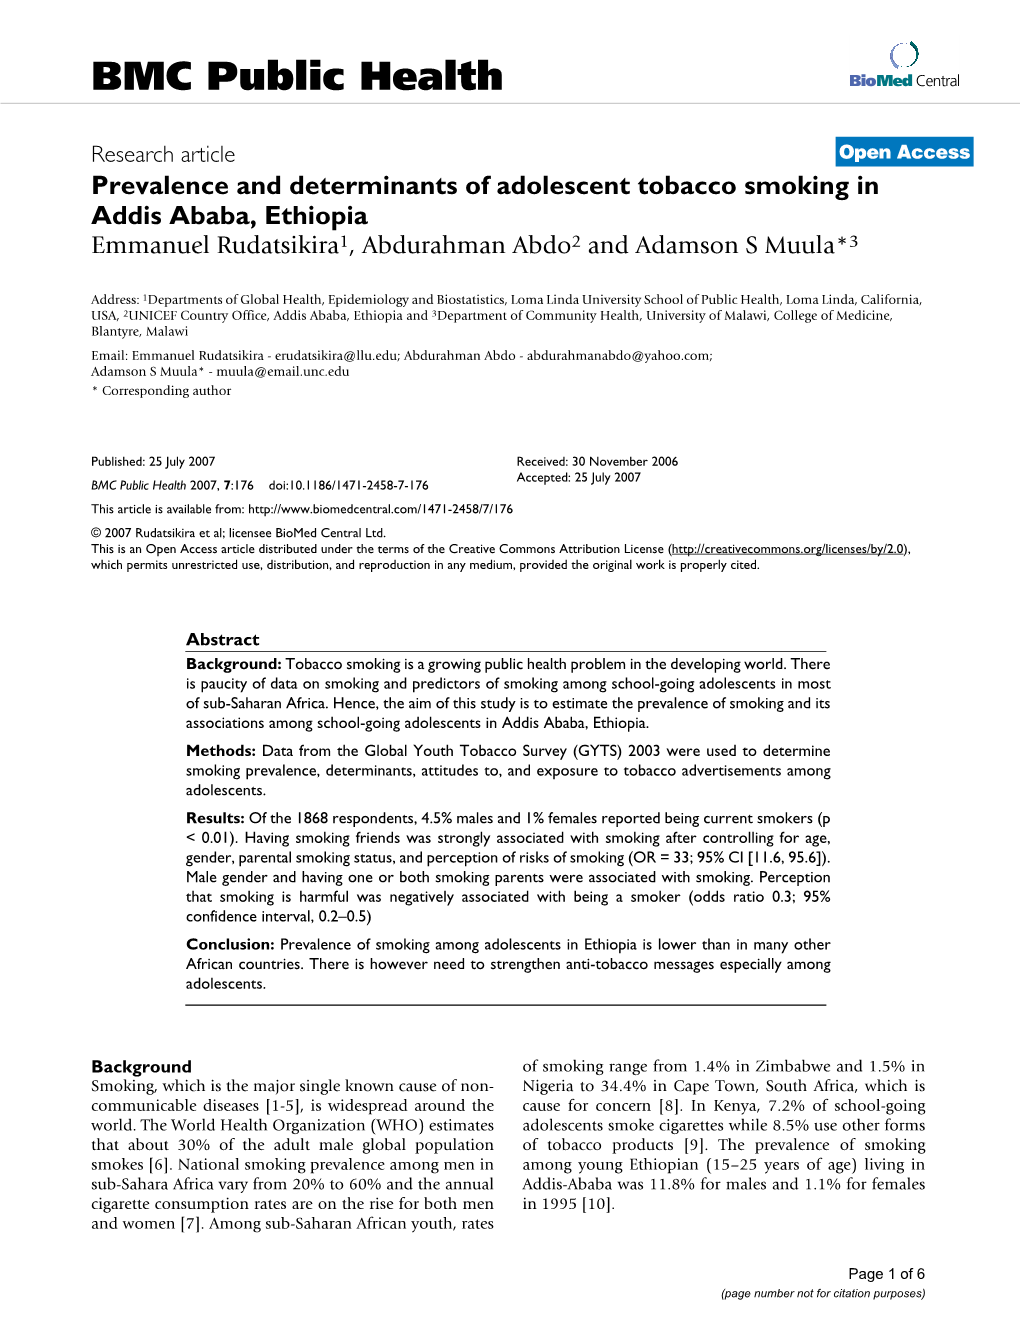 Prevalence and Determinants of Adolescent Tobacco Smoking in Addis Ababa, Ethiopia Emmanuel Rudatsikira1, Abdurahman Abdo2 and Adamson S Muula*3